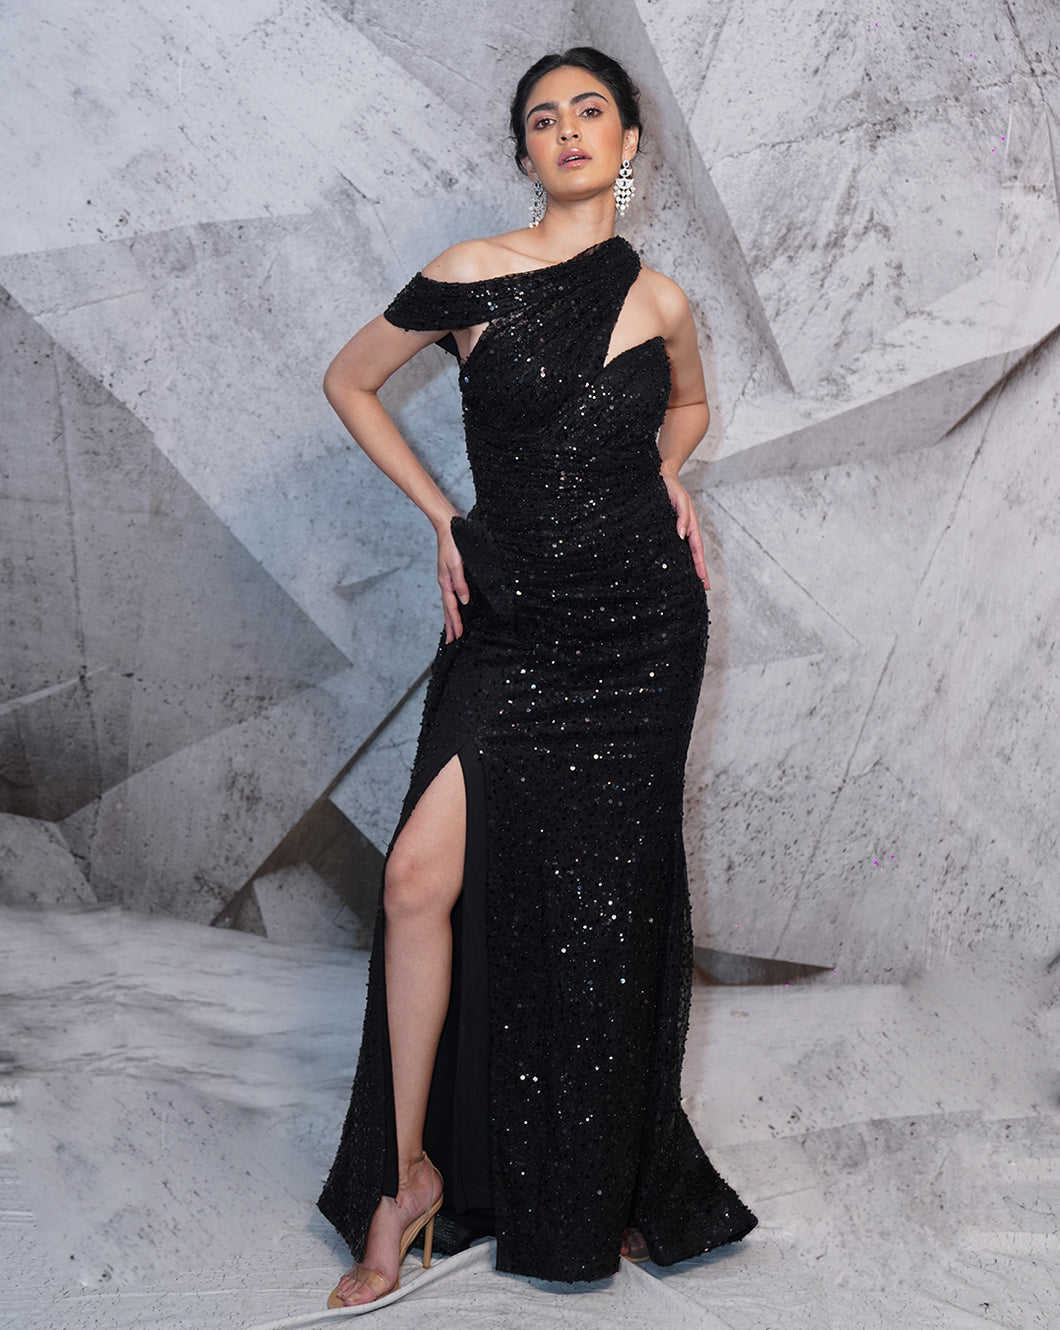 The Elegant sequins black gown